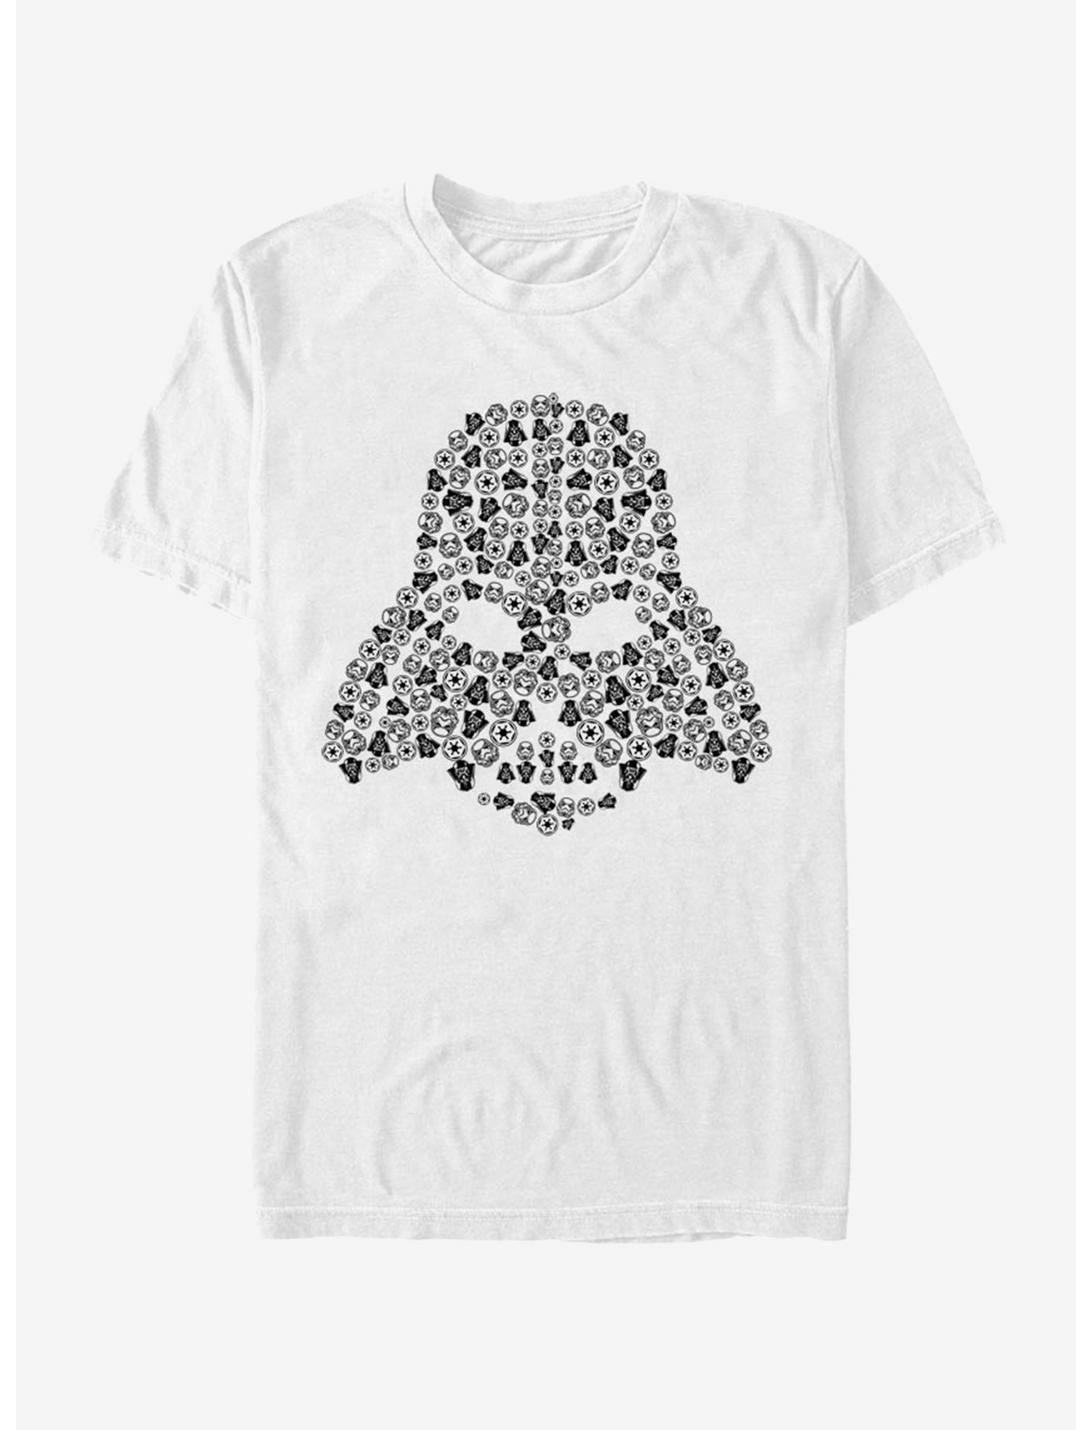 Star Wars Small Vaders T-Shirt, WHITE, hi-res